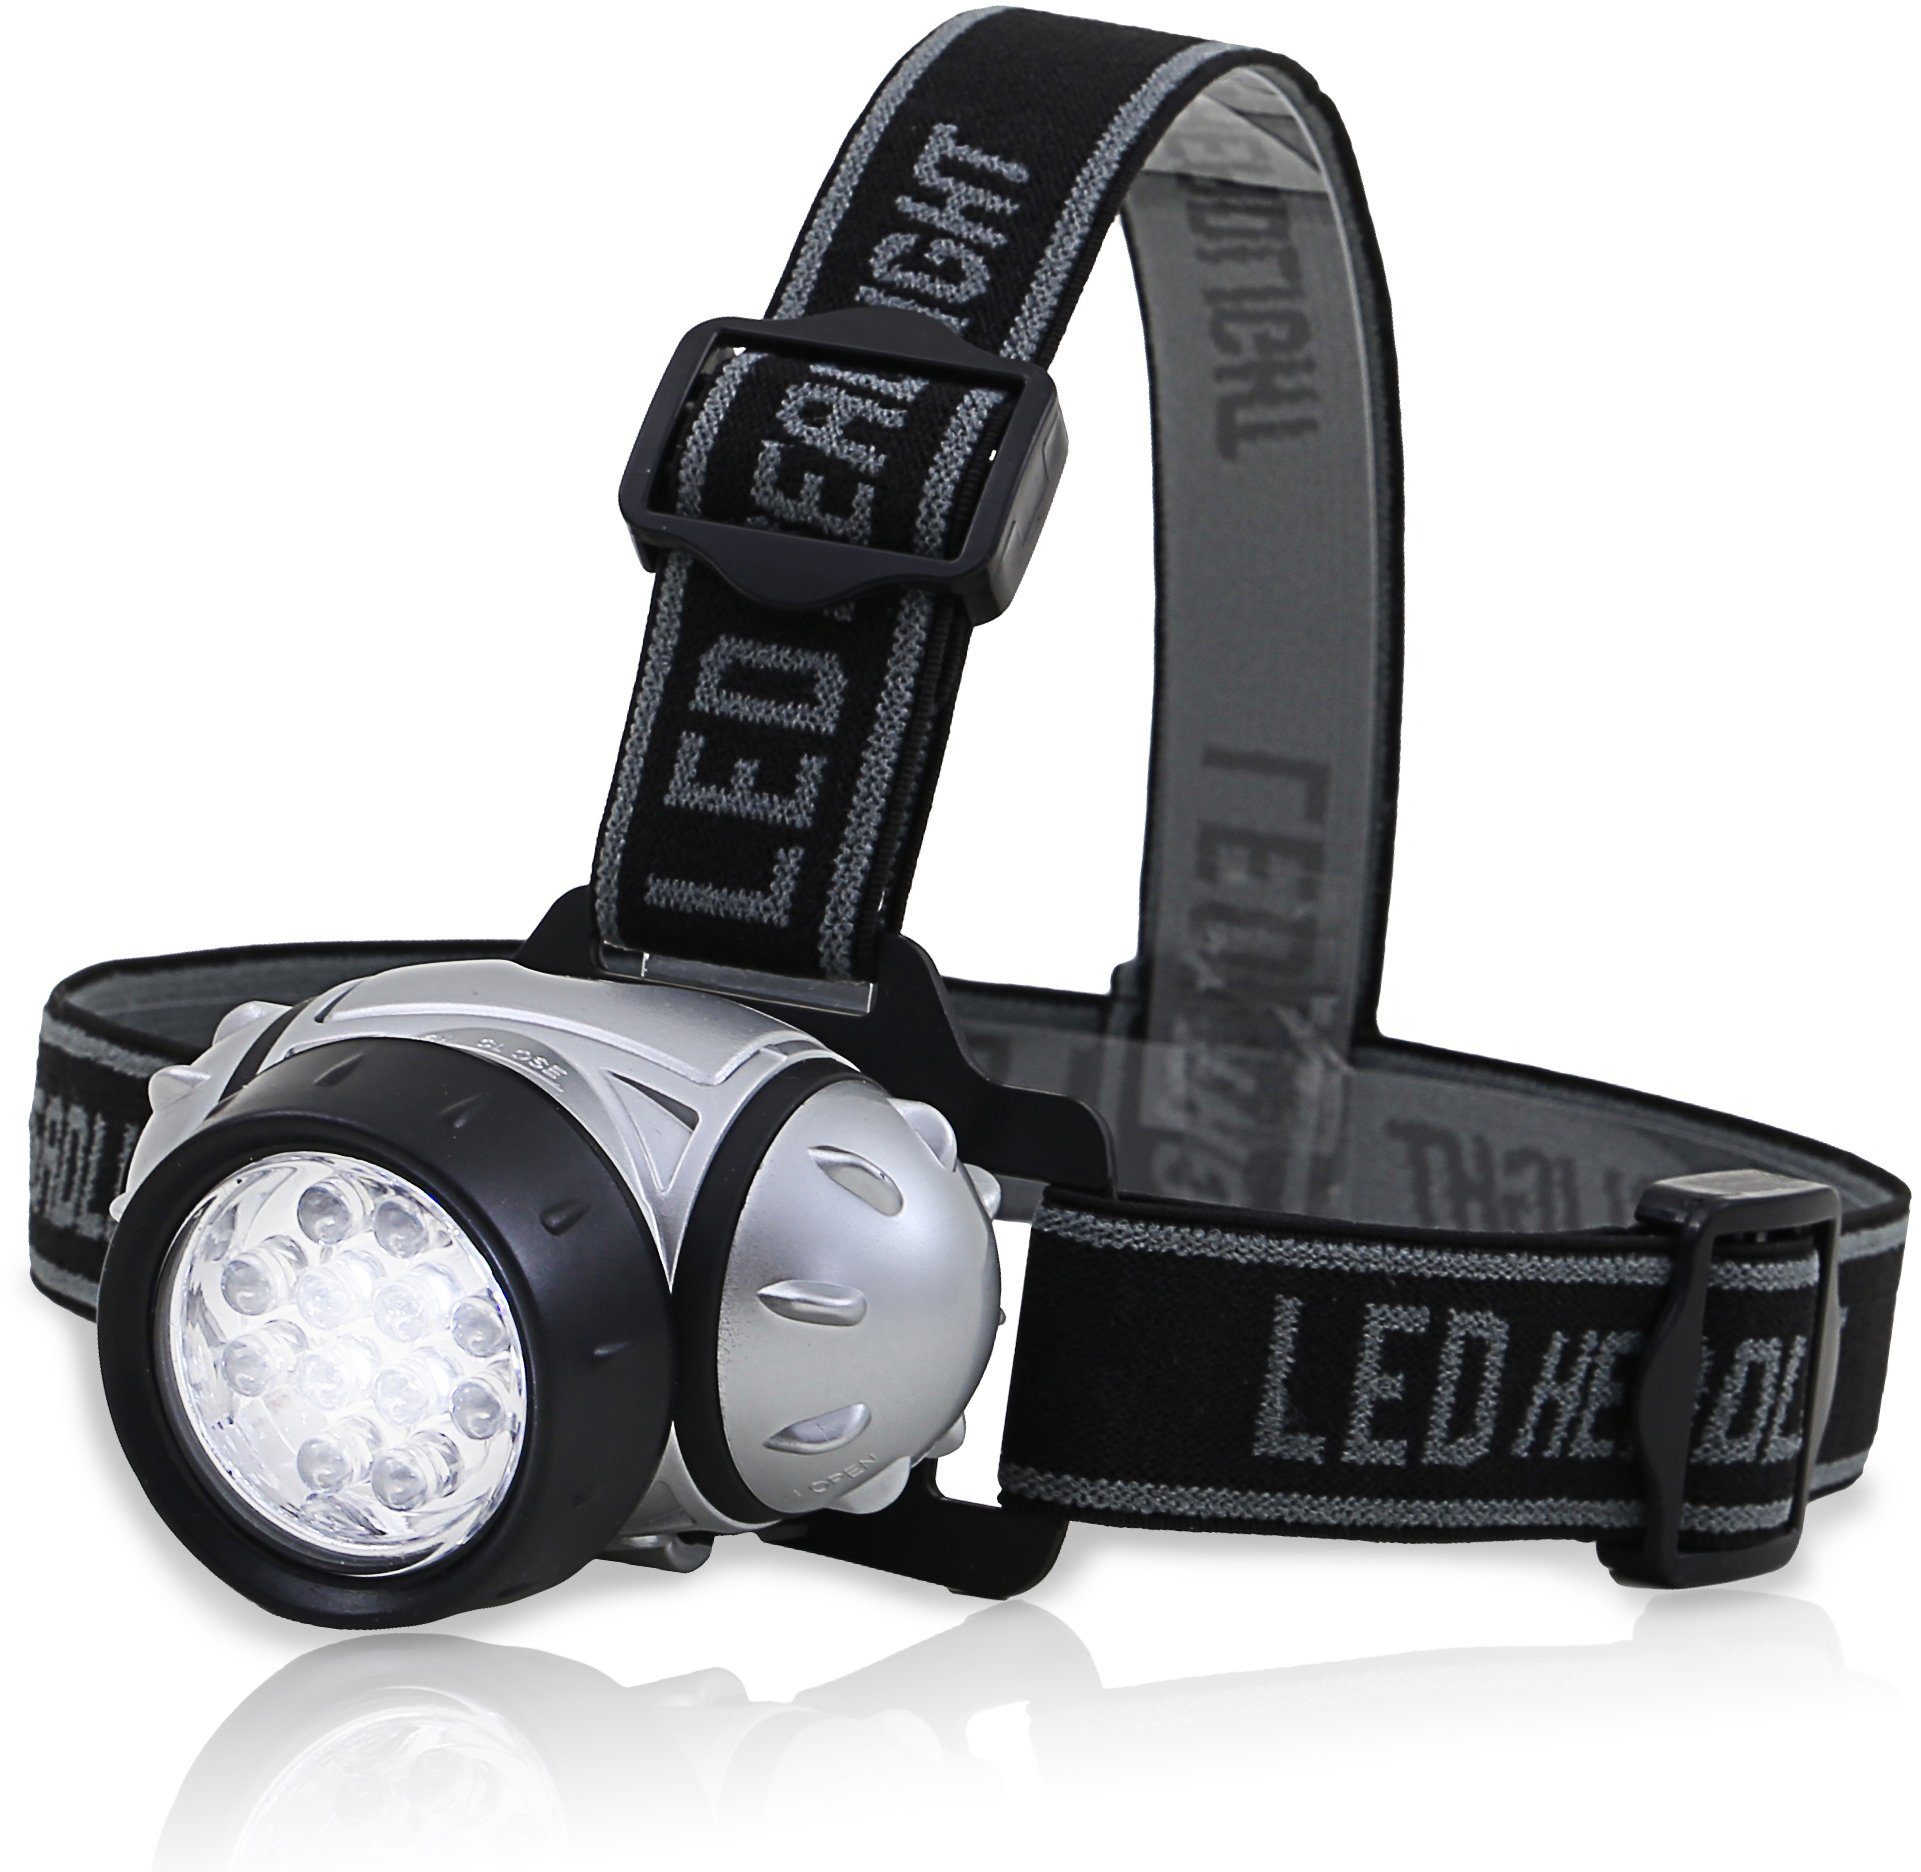 LED STIRNLAMPE 3 PLUS 1 KOPFLAMPE LAMPE OUTDOORLAMPE LICHT superhell headlight 